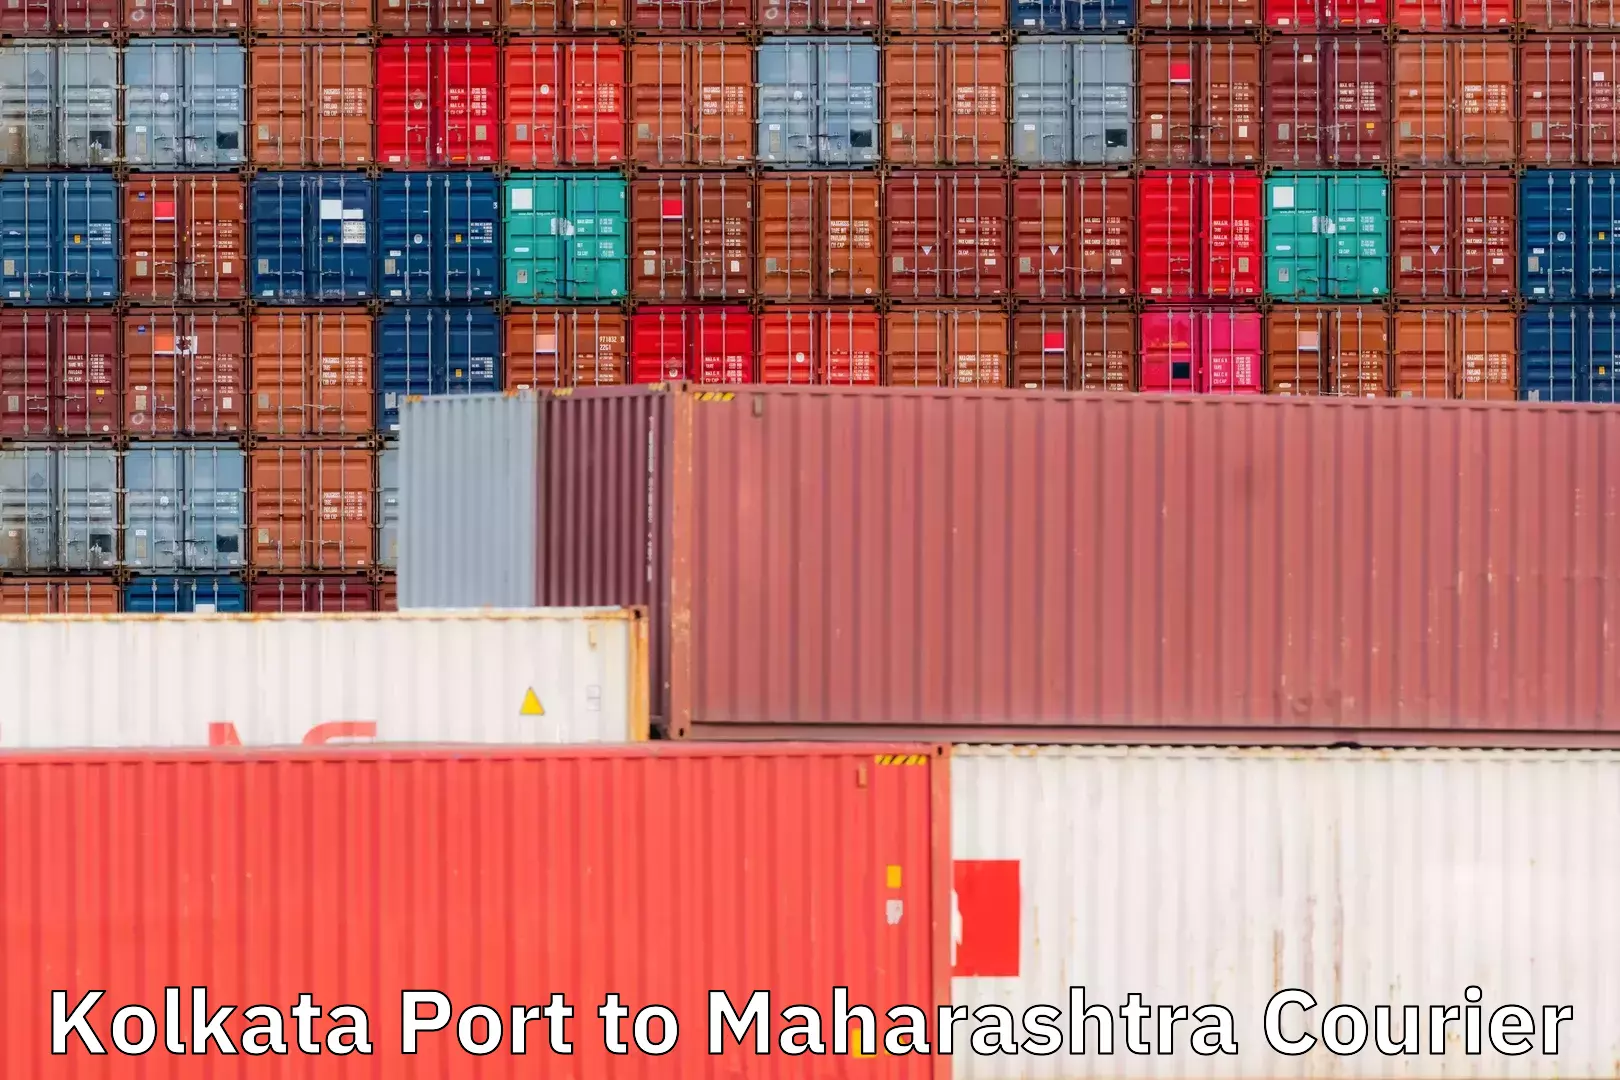 Modern delivery methods in Kolkata Port to Maharashtra